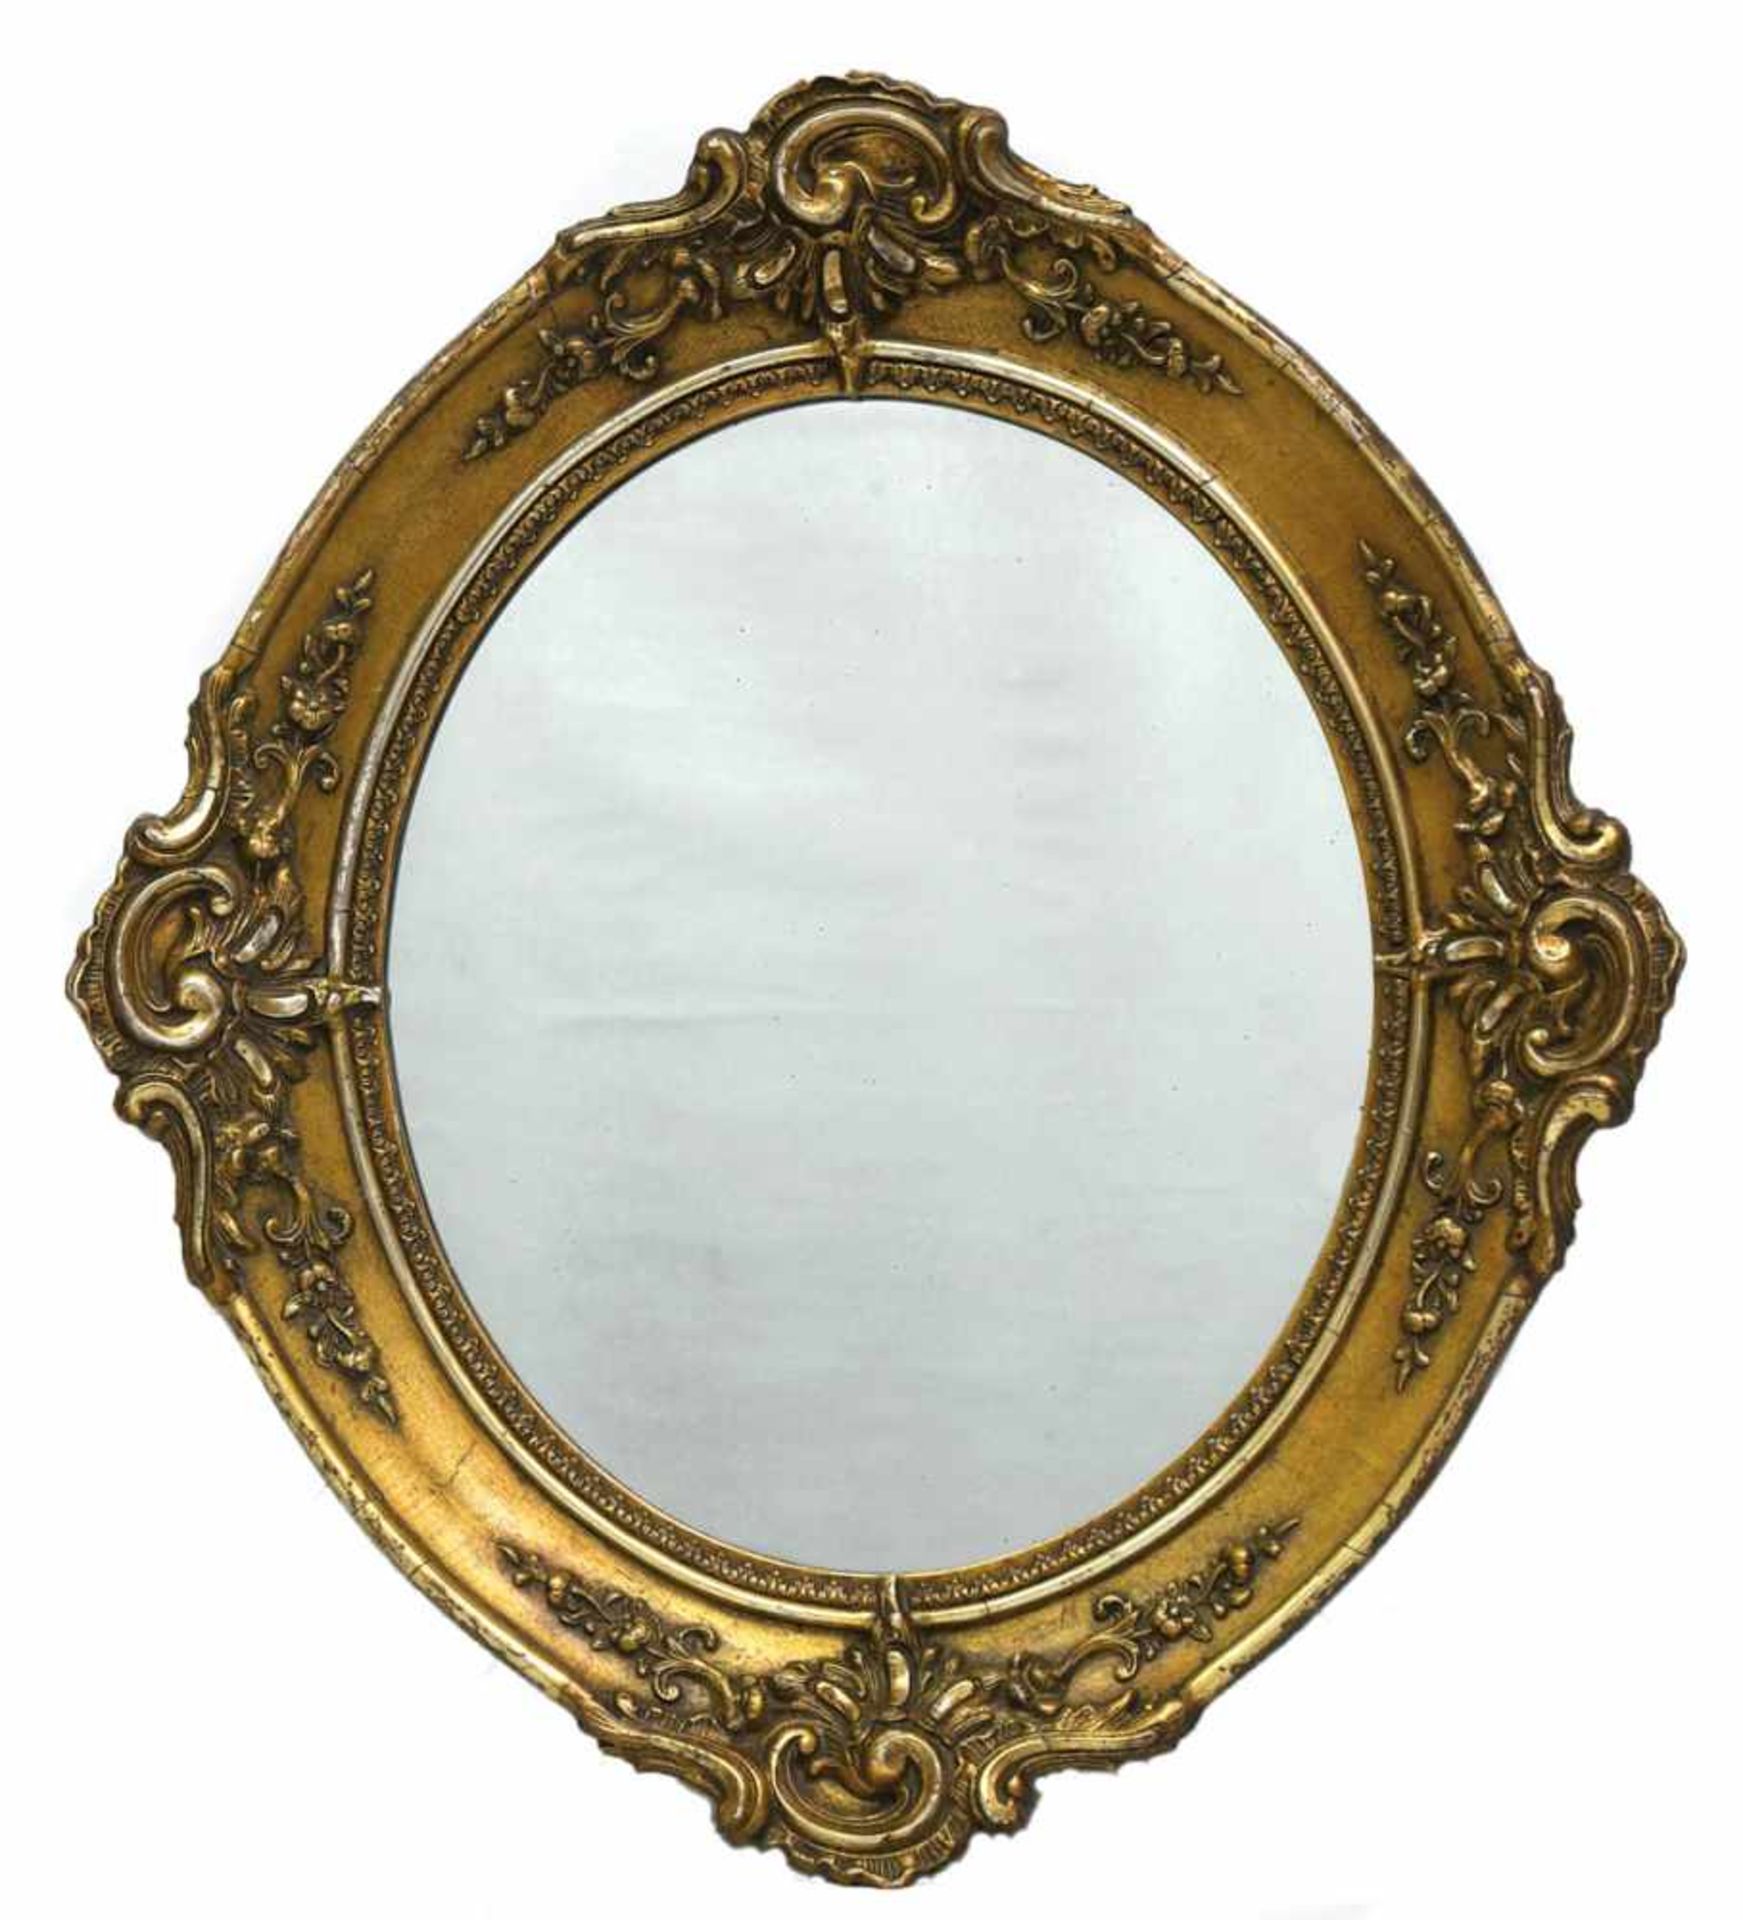 Spiegel, 19. Jh., Holz, vergoldet, ovale Form mit Stuckverzierungen, 55x49 cm